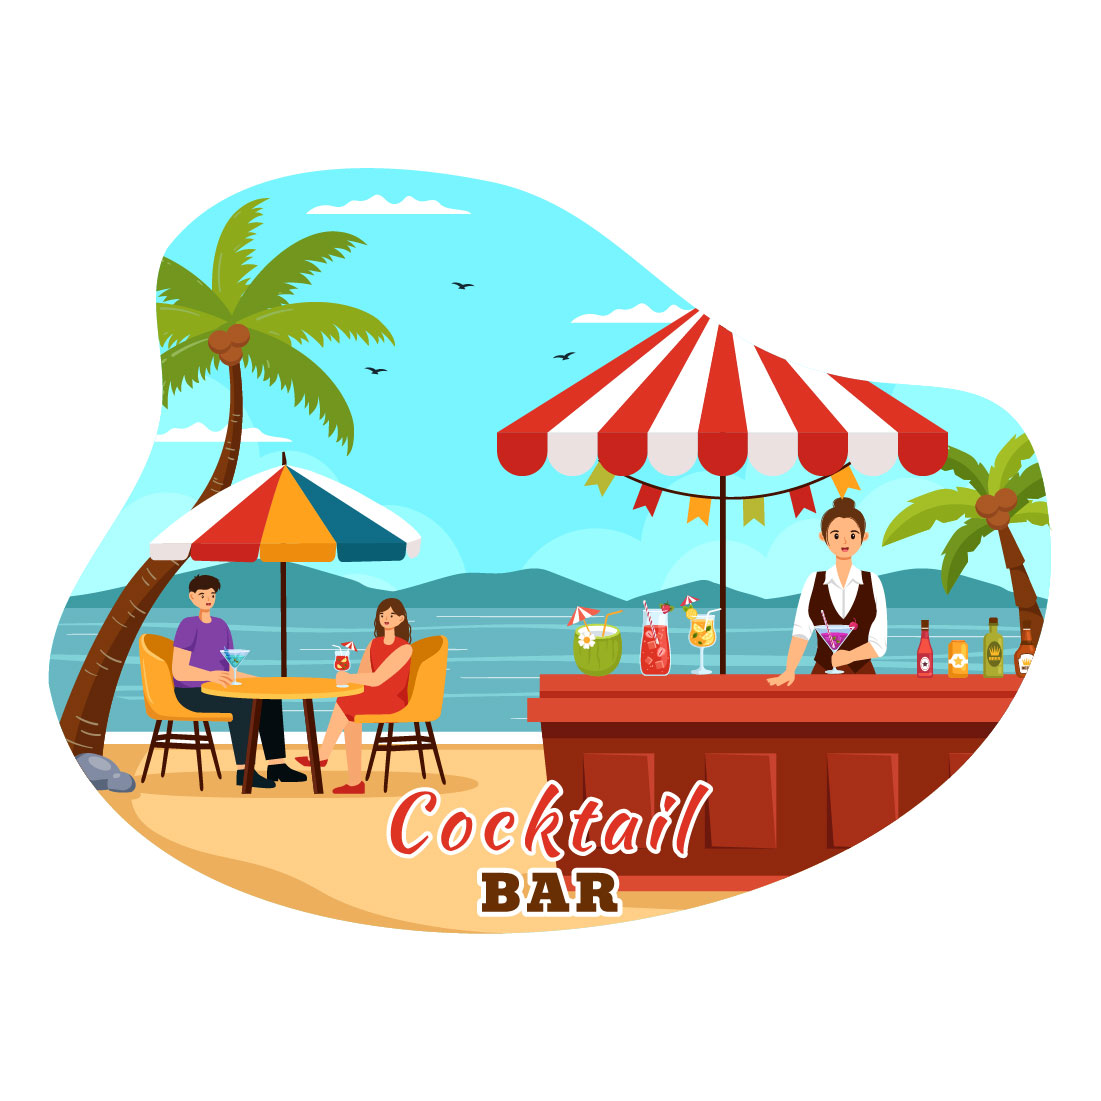 9 Cocktail Bar Illustration preview image.